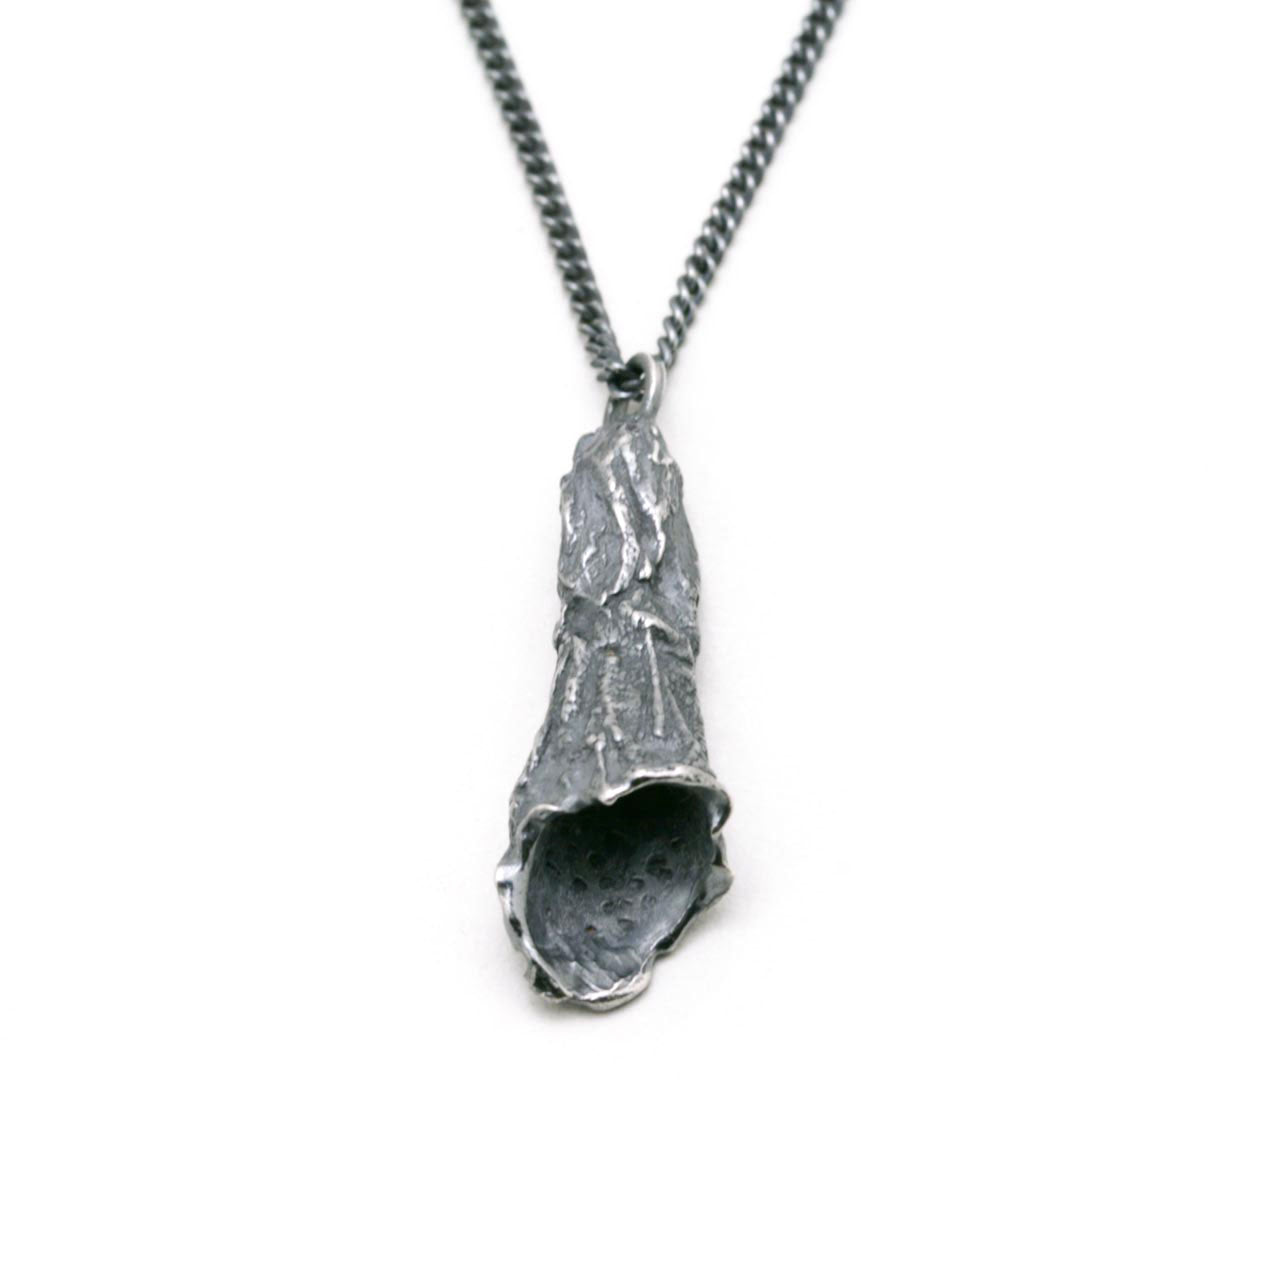 oxidised foxglove pendant necklace on white background